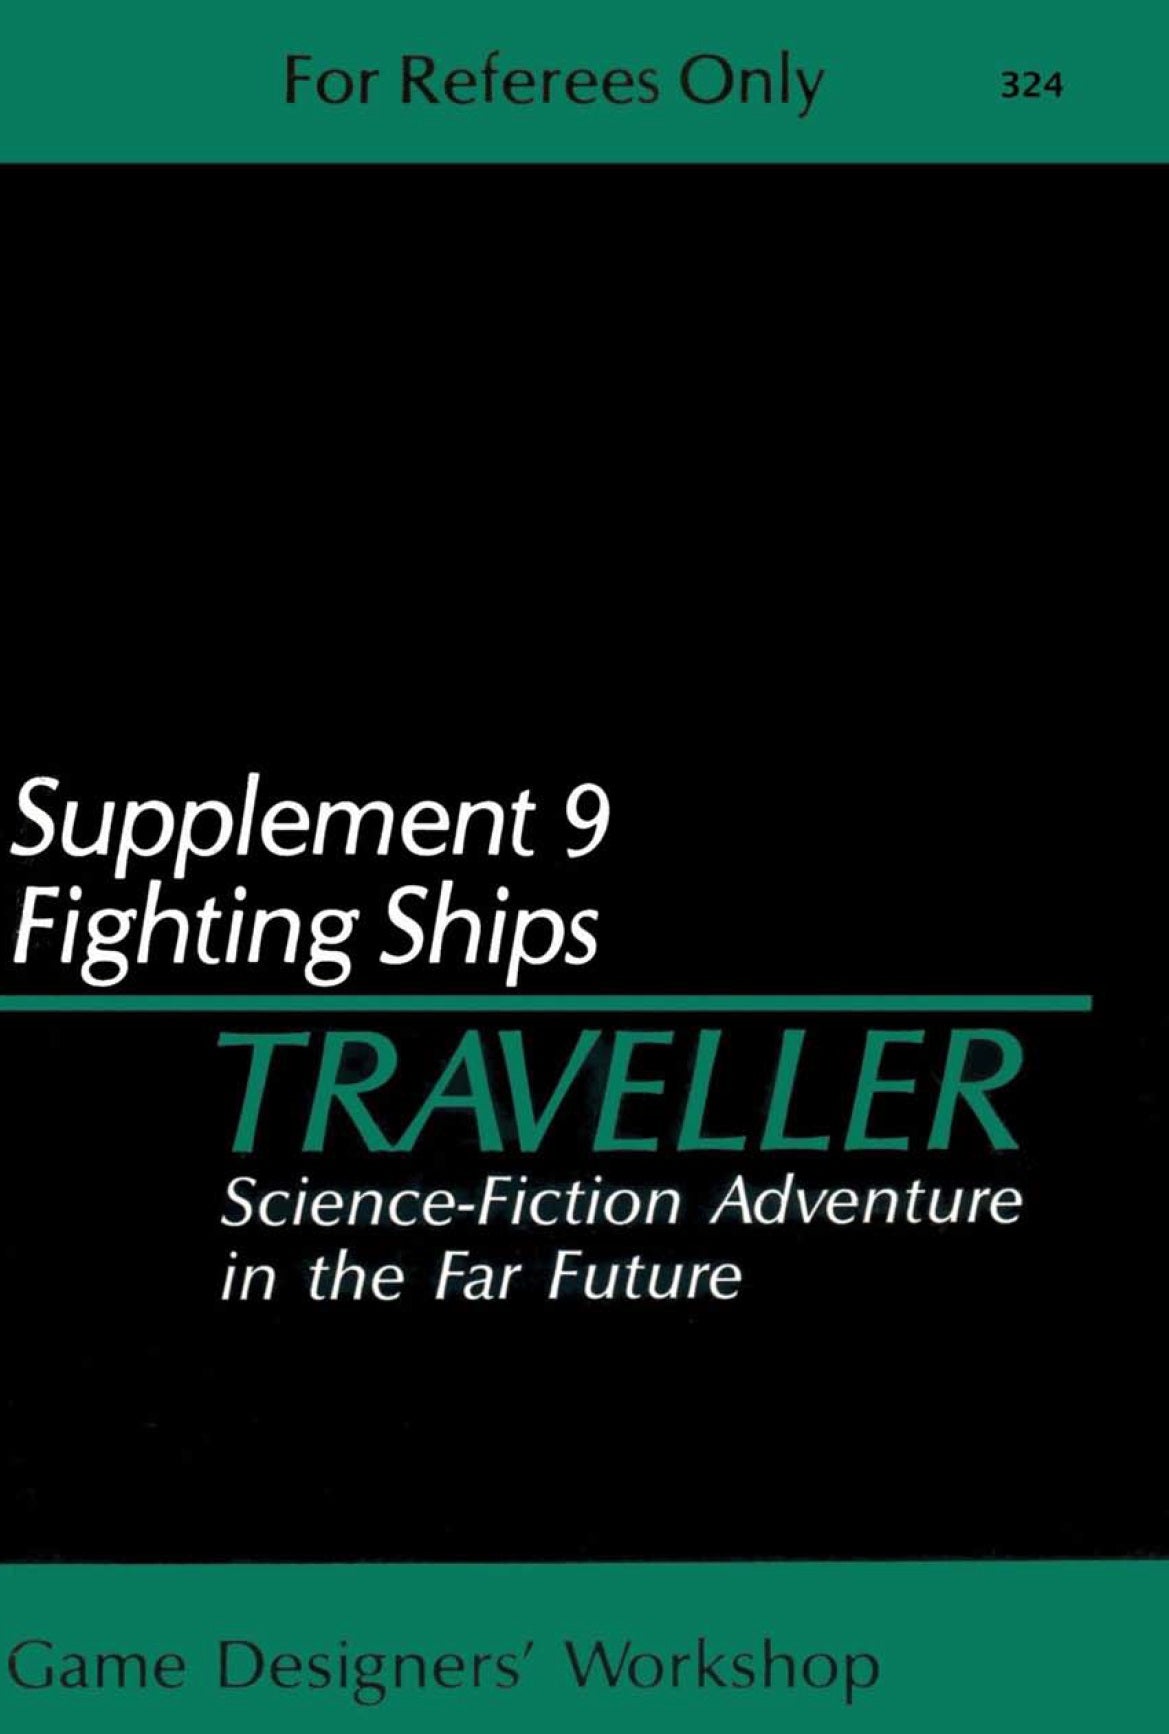 Supplement 9: Fighting Ships ebook